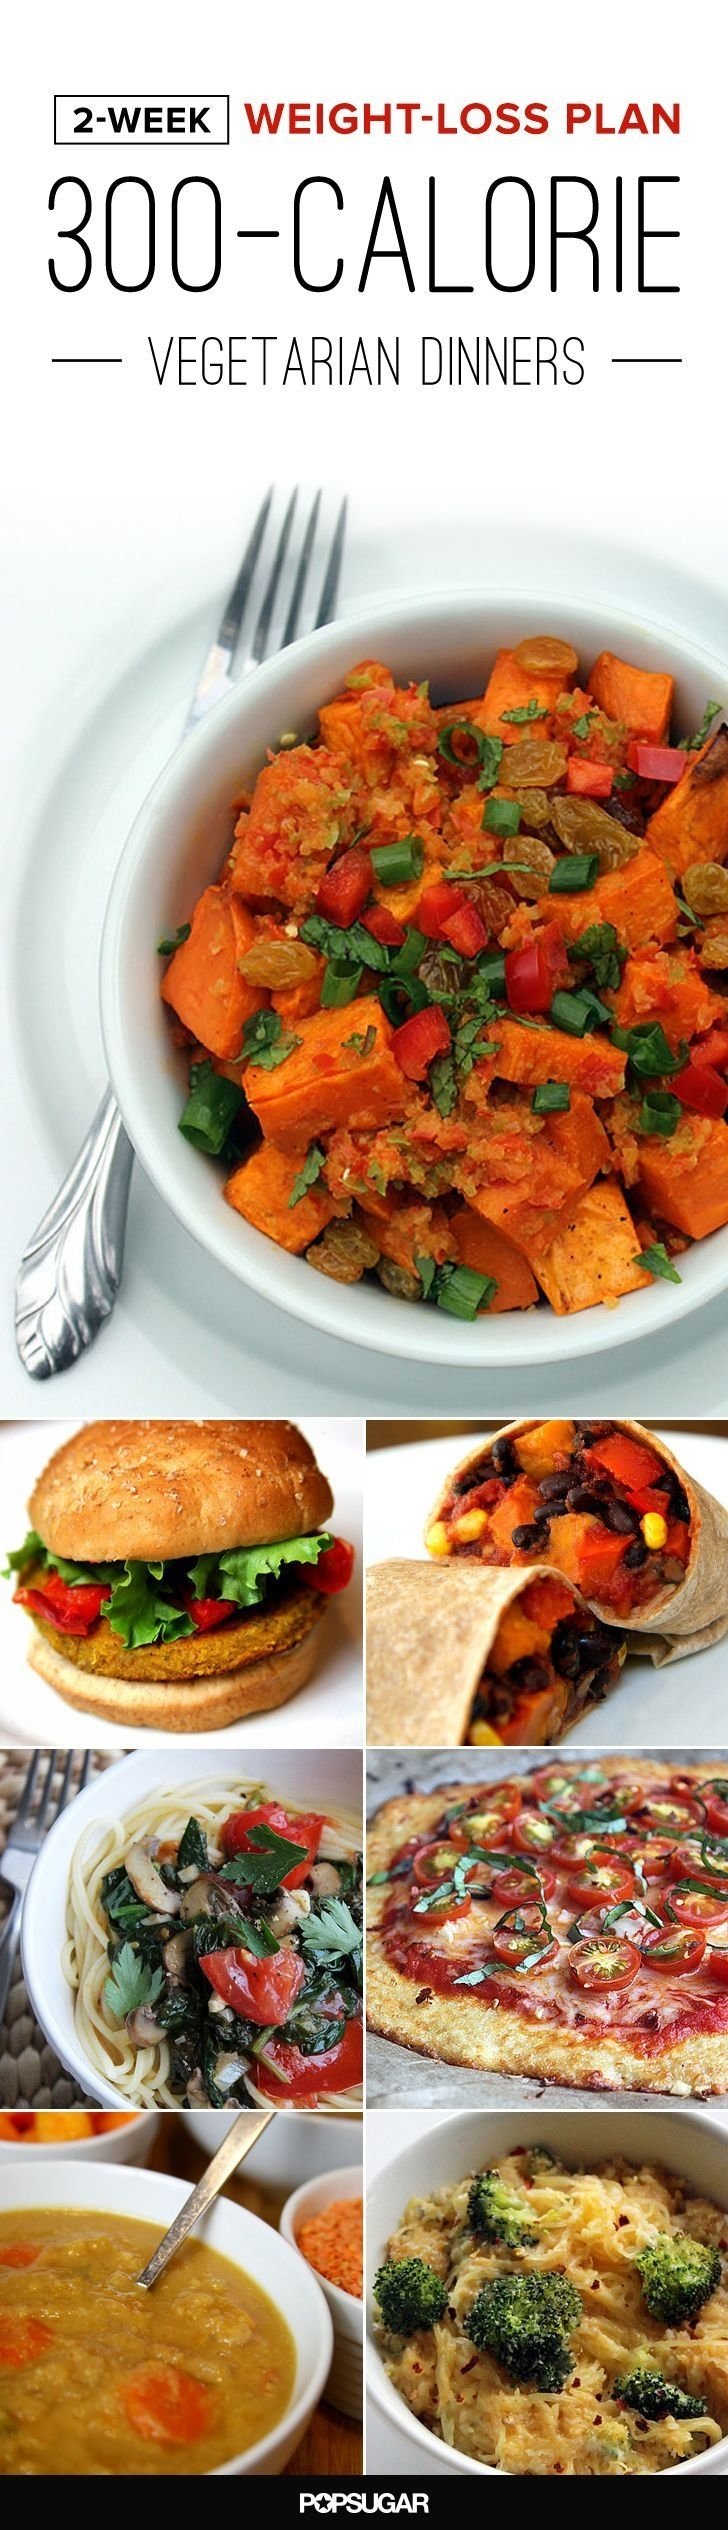 10 Amazing Vegetarian Dinner Ideas For Two 2 week meal plan vegetarian dinners under 300 calories 300 2022